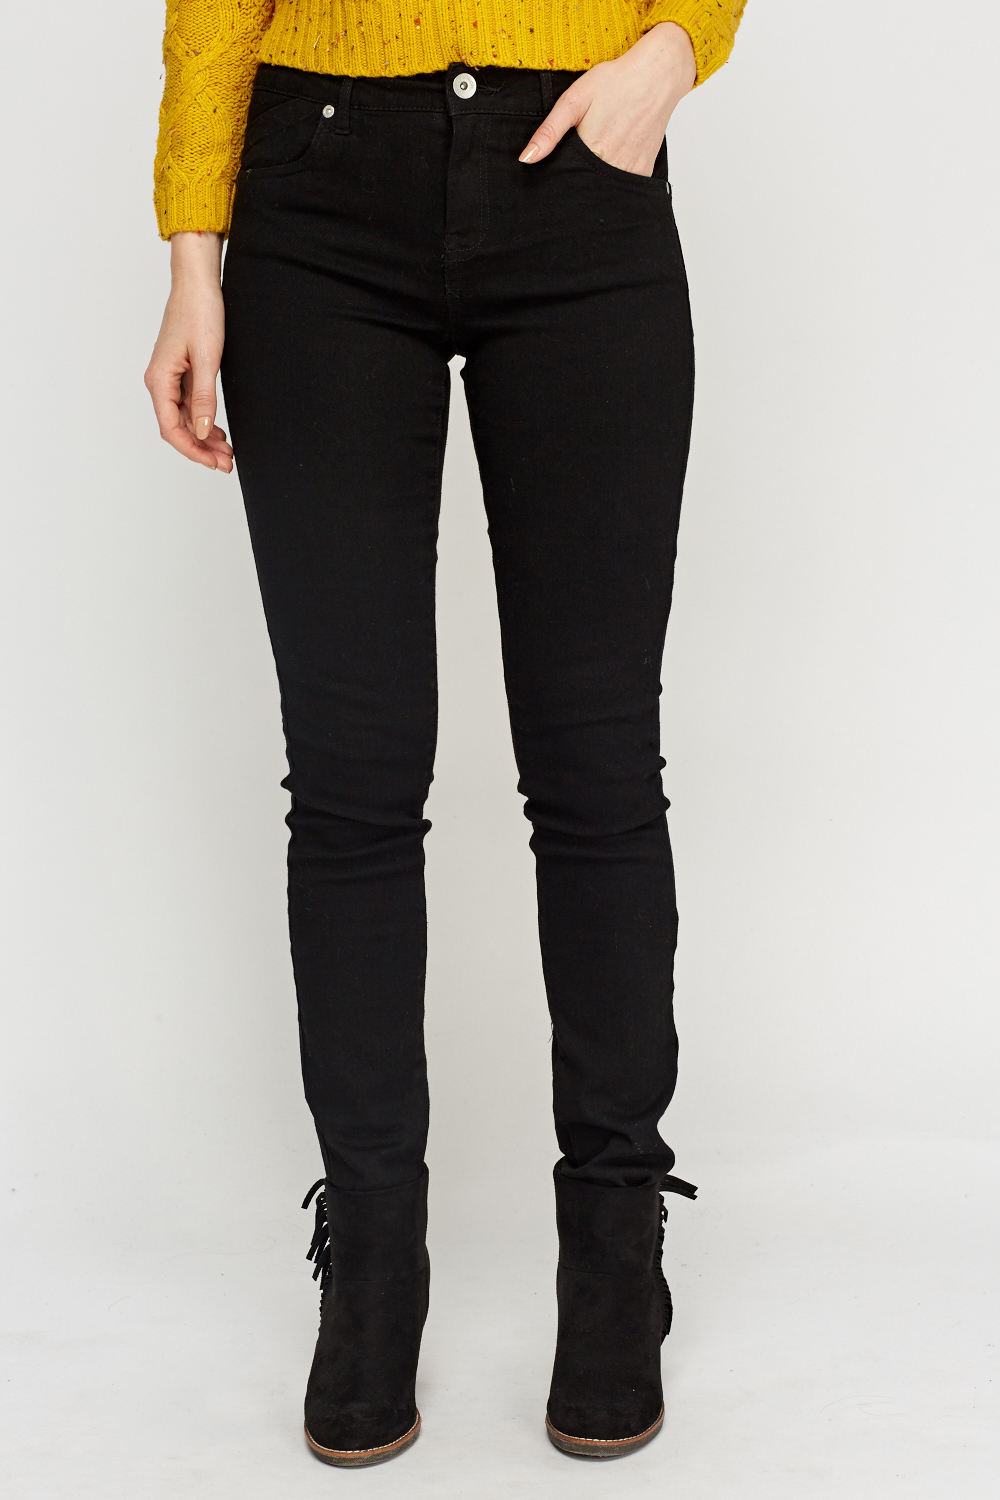 Skinny Fit Denim Jeans - Just $7